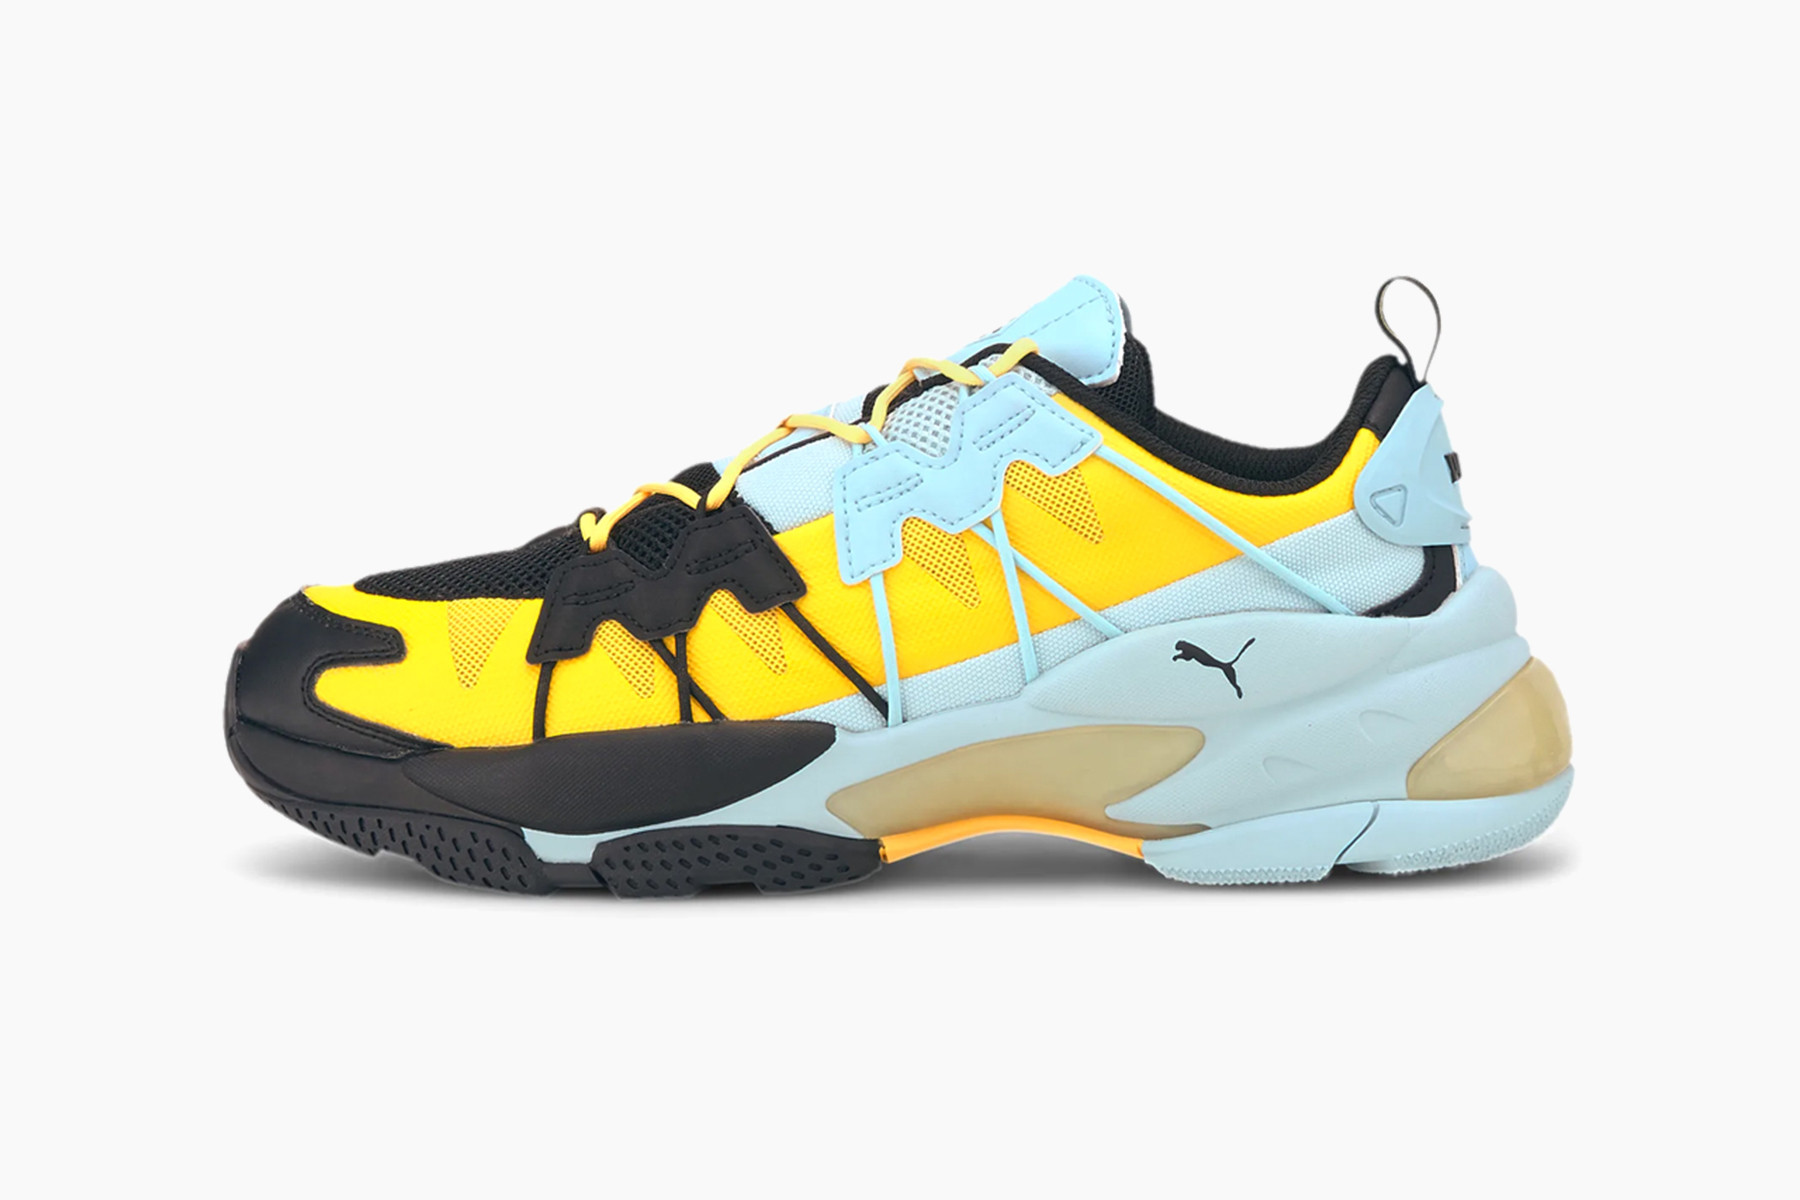 yellow sneakers puma